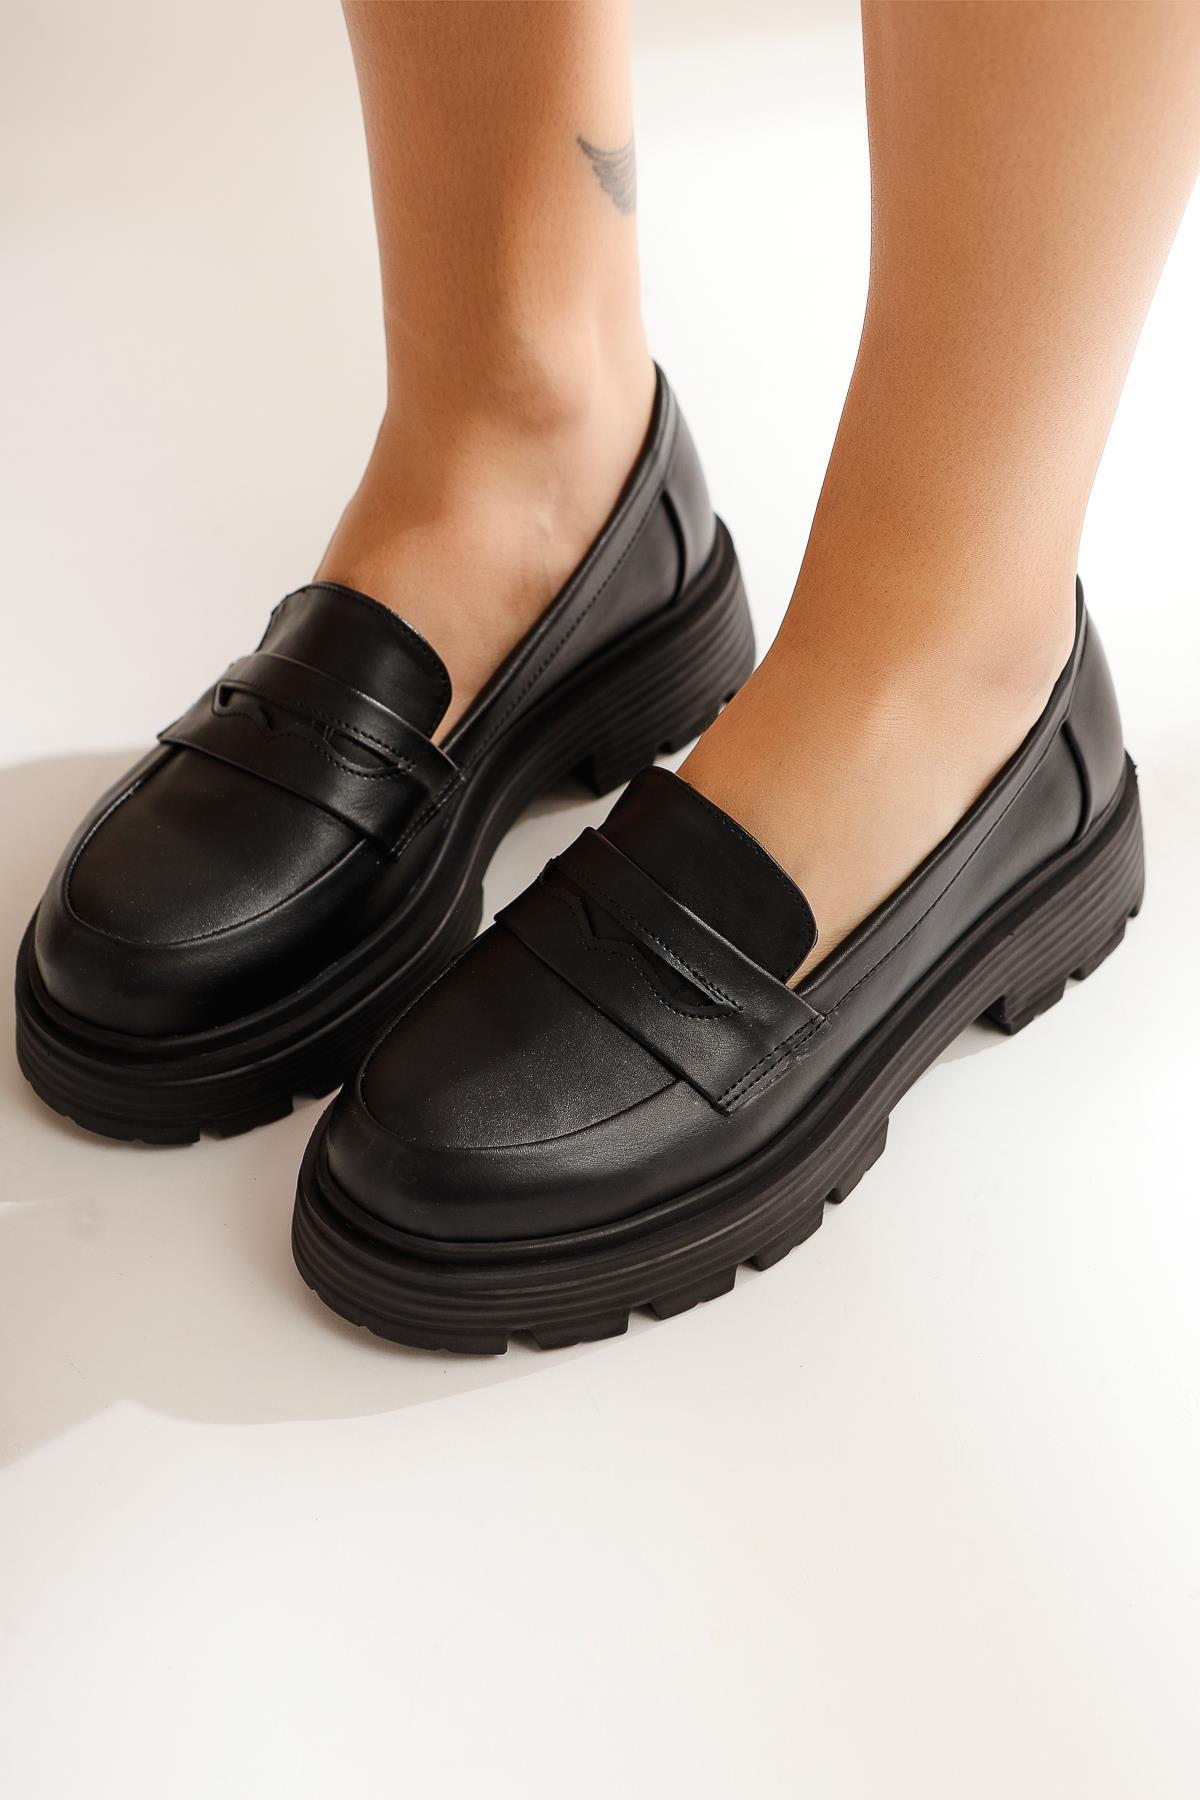 Gerta Black Oxford Shoes